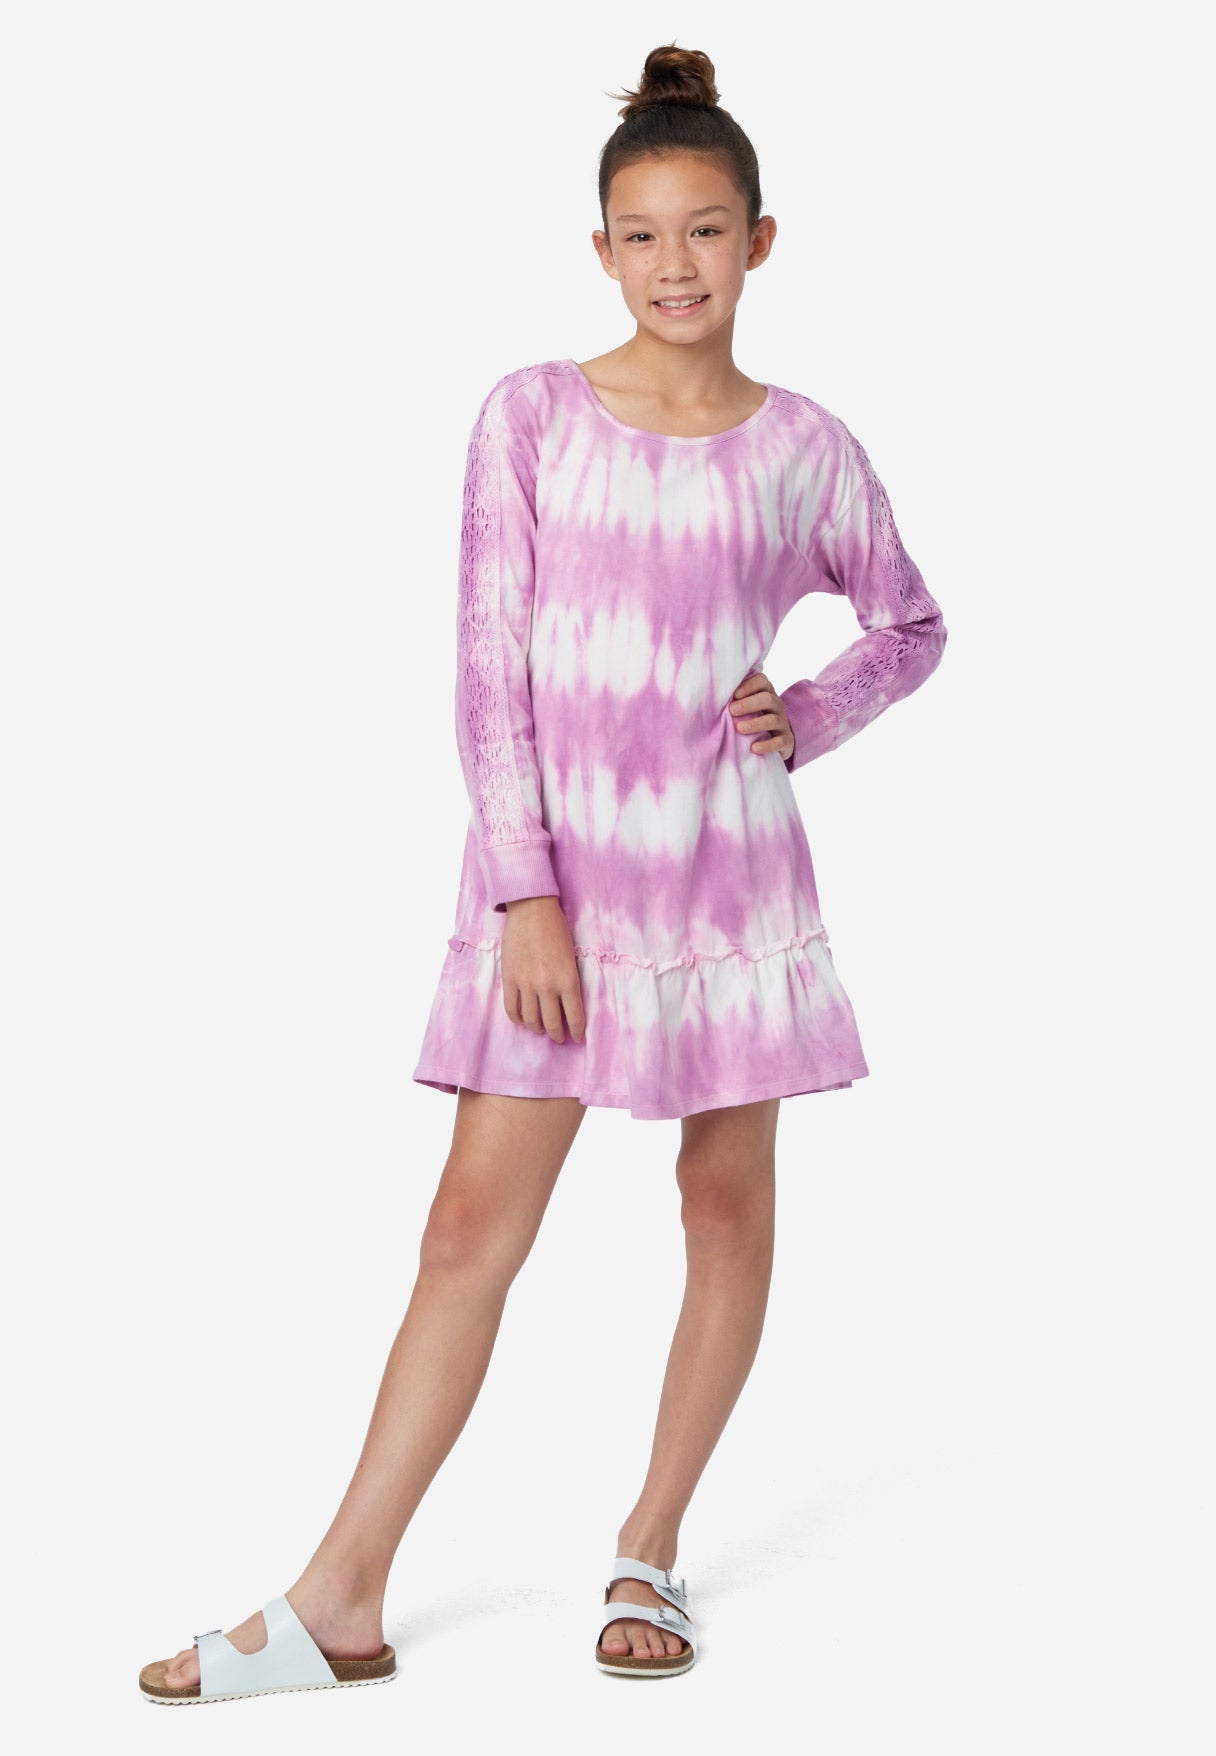 Justice Tie-Dye Lace-Trim Mini Girl's Dress in Viola, Size Medium (10)